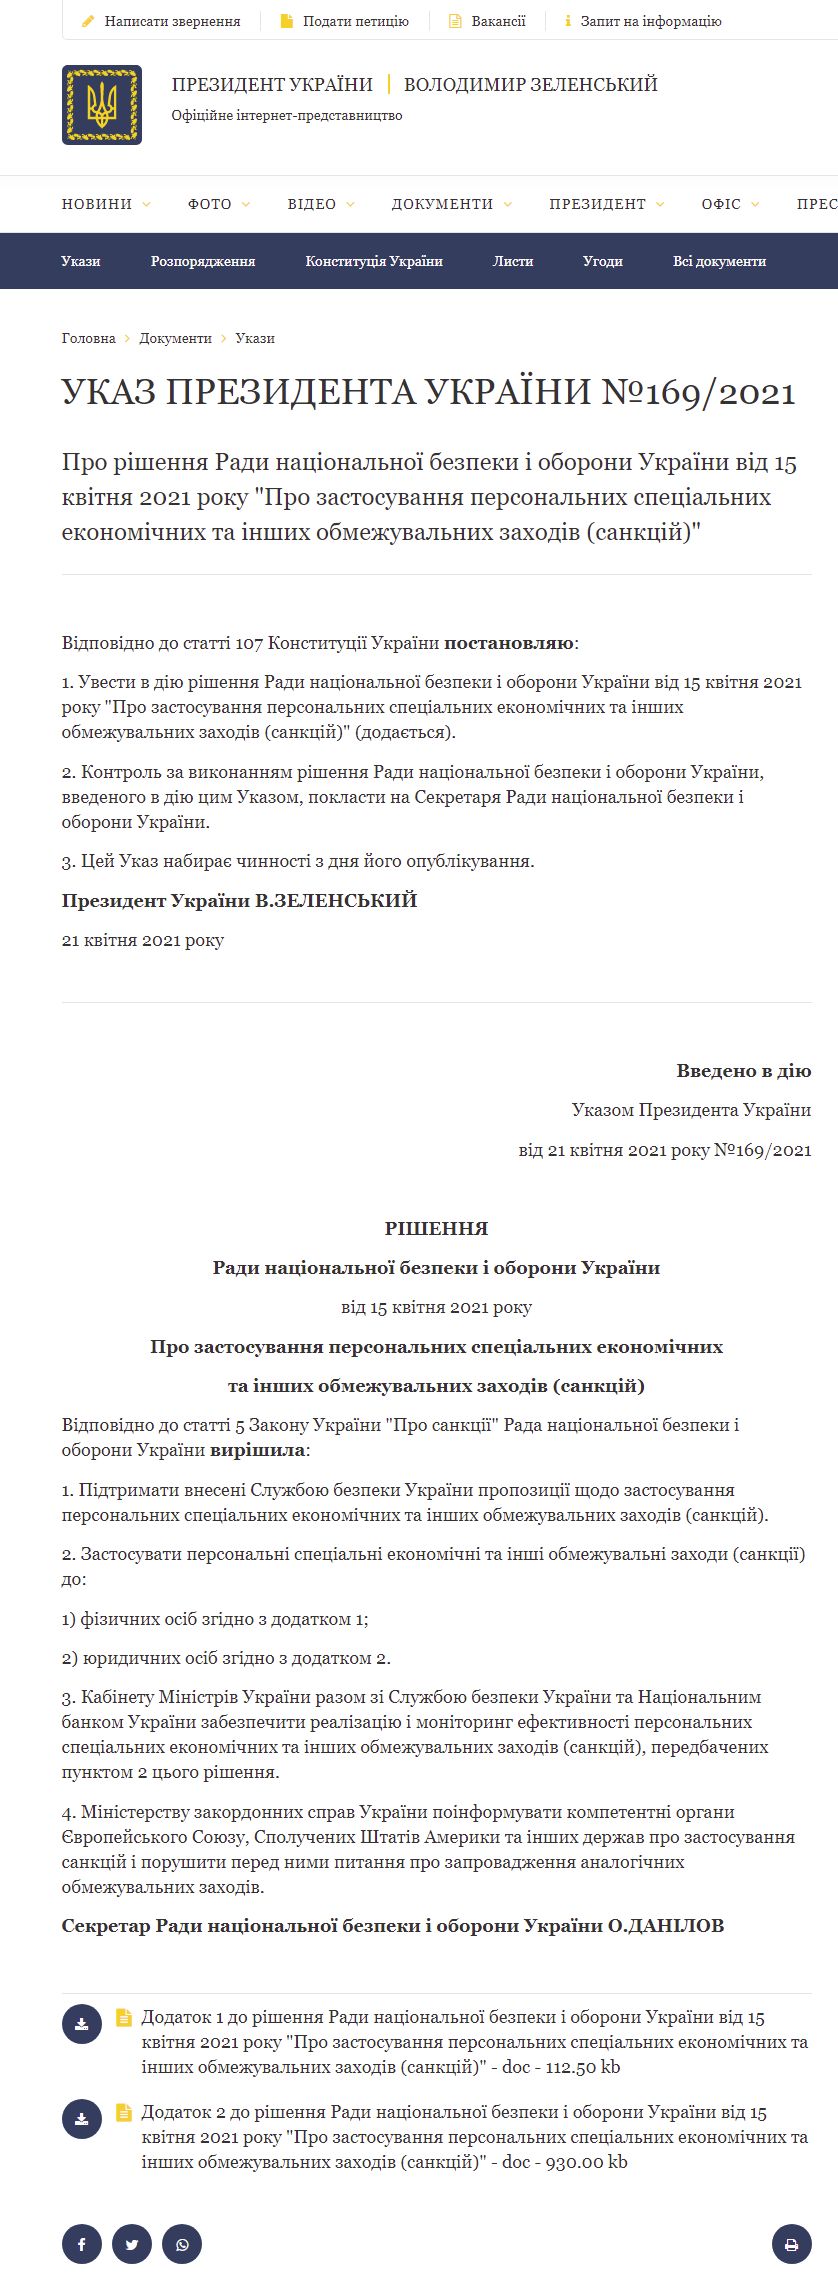 https://www.president.gov.ua/documents/1692021-38729